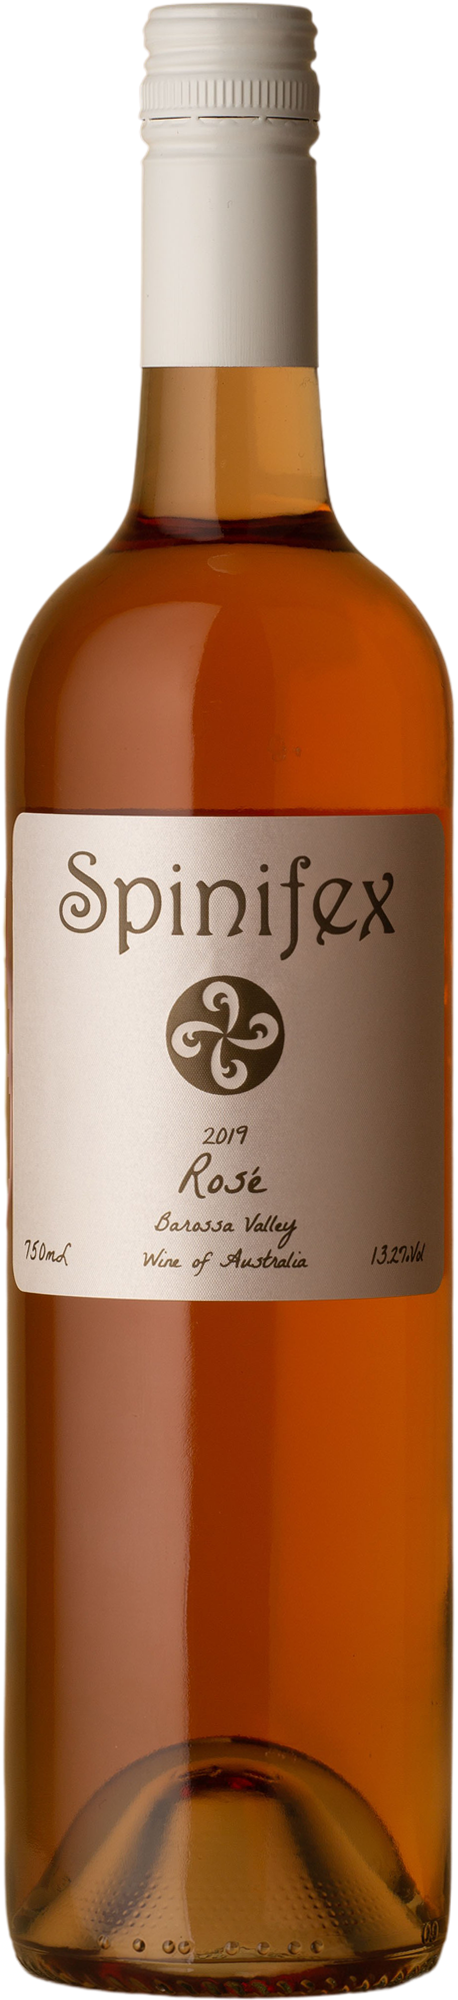 Spinifex - Rosé 2019 Rose